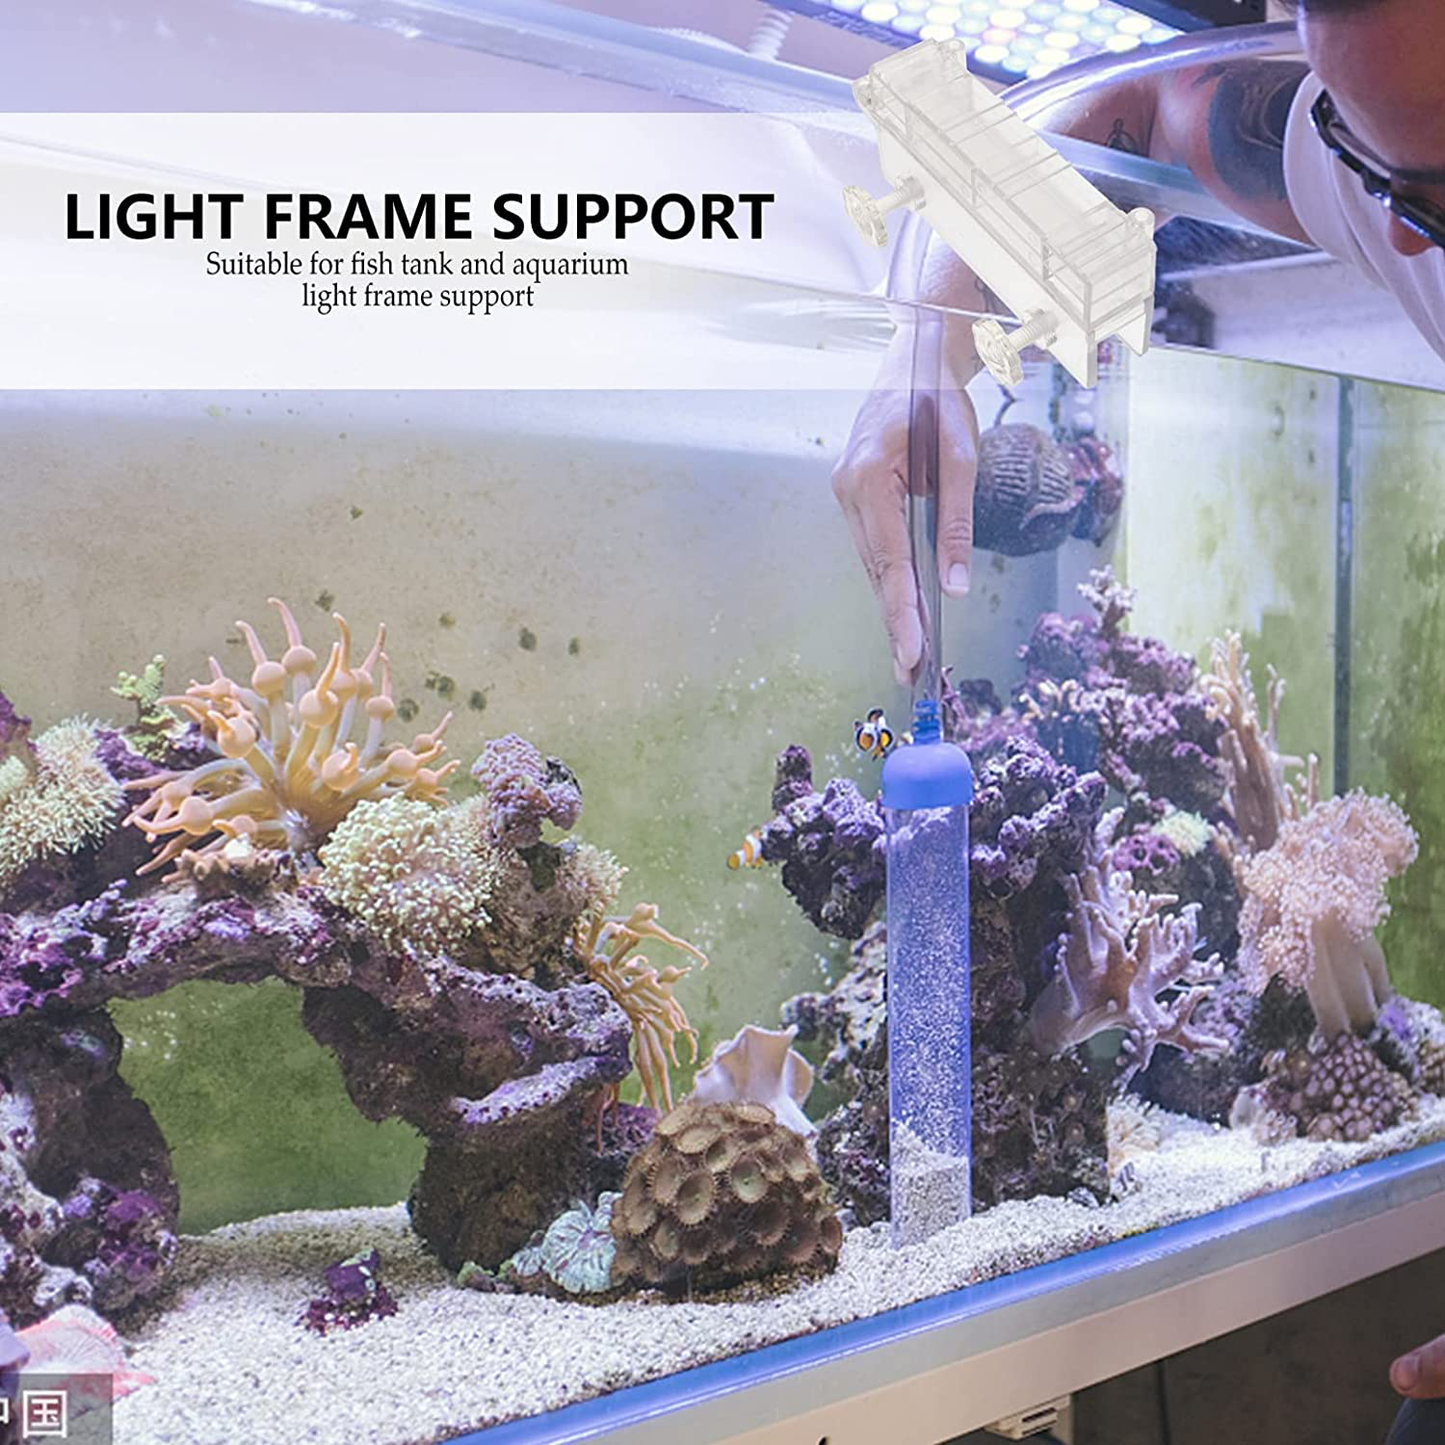 Balacoo 2 PCS Aquarium Light Stand Hanging Acrylic Fish Tank LED Light Holder Lamp Fixtures Support Stands Box Fish Tank Lighting Tools Bracket,Transparent,V1Z49L16Mt2X9096C40Xym,12X4.8X2.6Cm Animals & Pet Supplies > Pet Supplies > Fish Supplies > Aquarium Lighting balacoo   